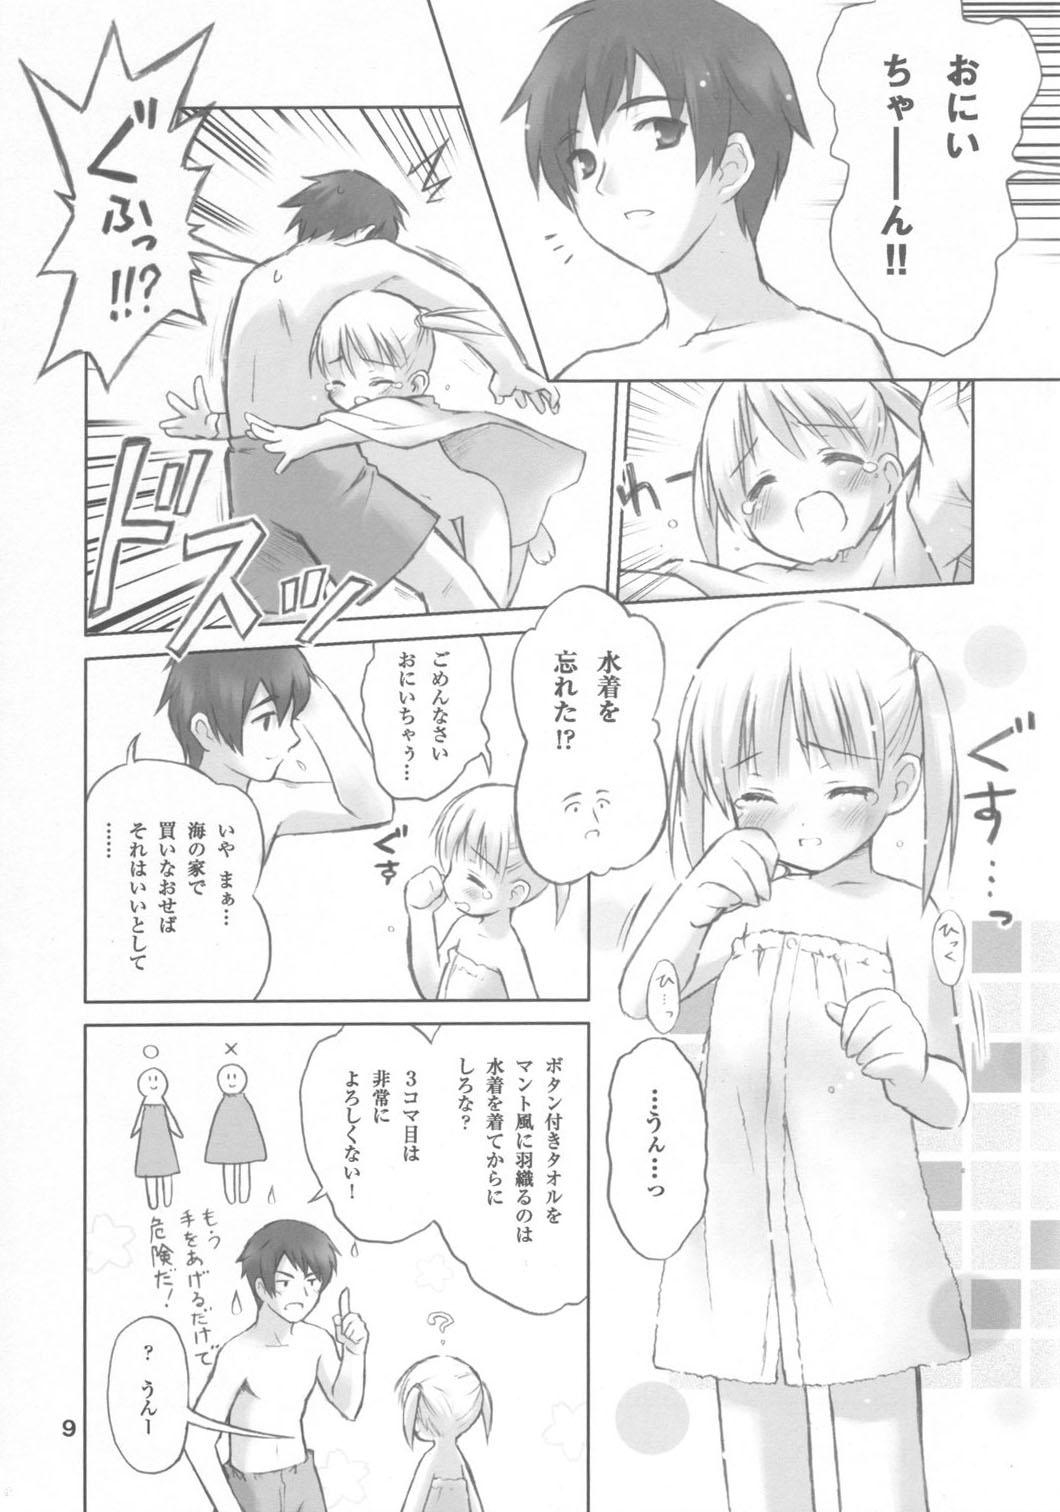 Story Sakura Musubi Waha Homemade - Page 8